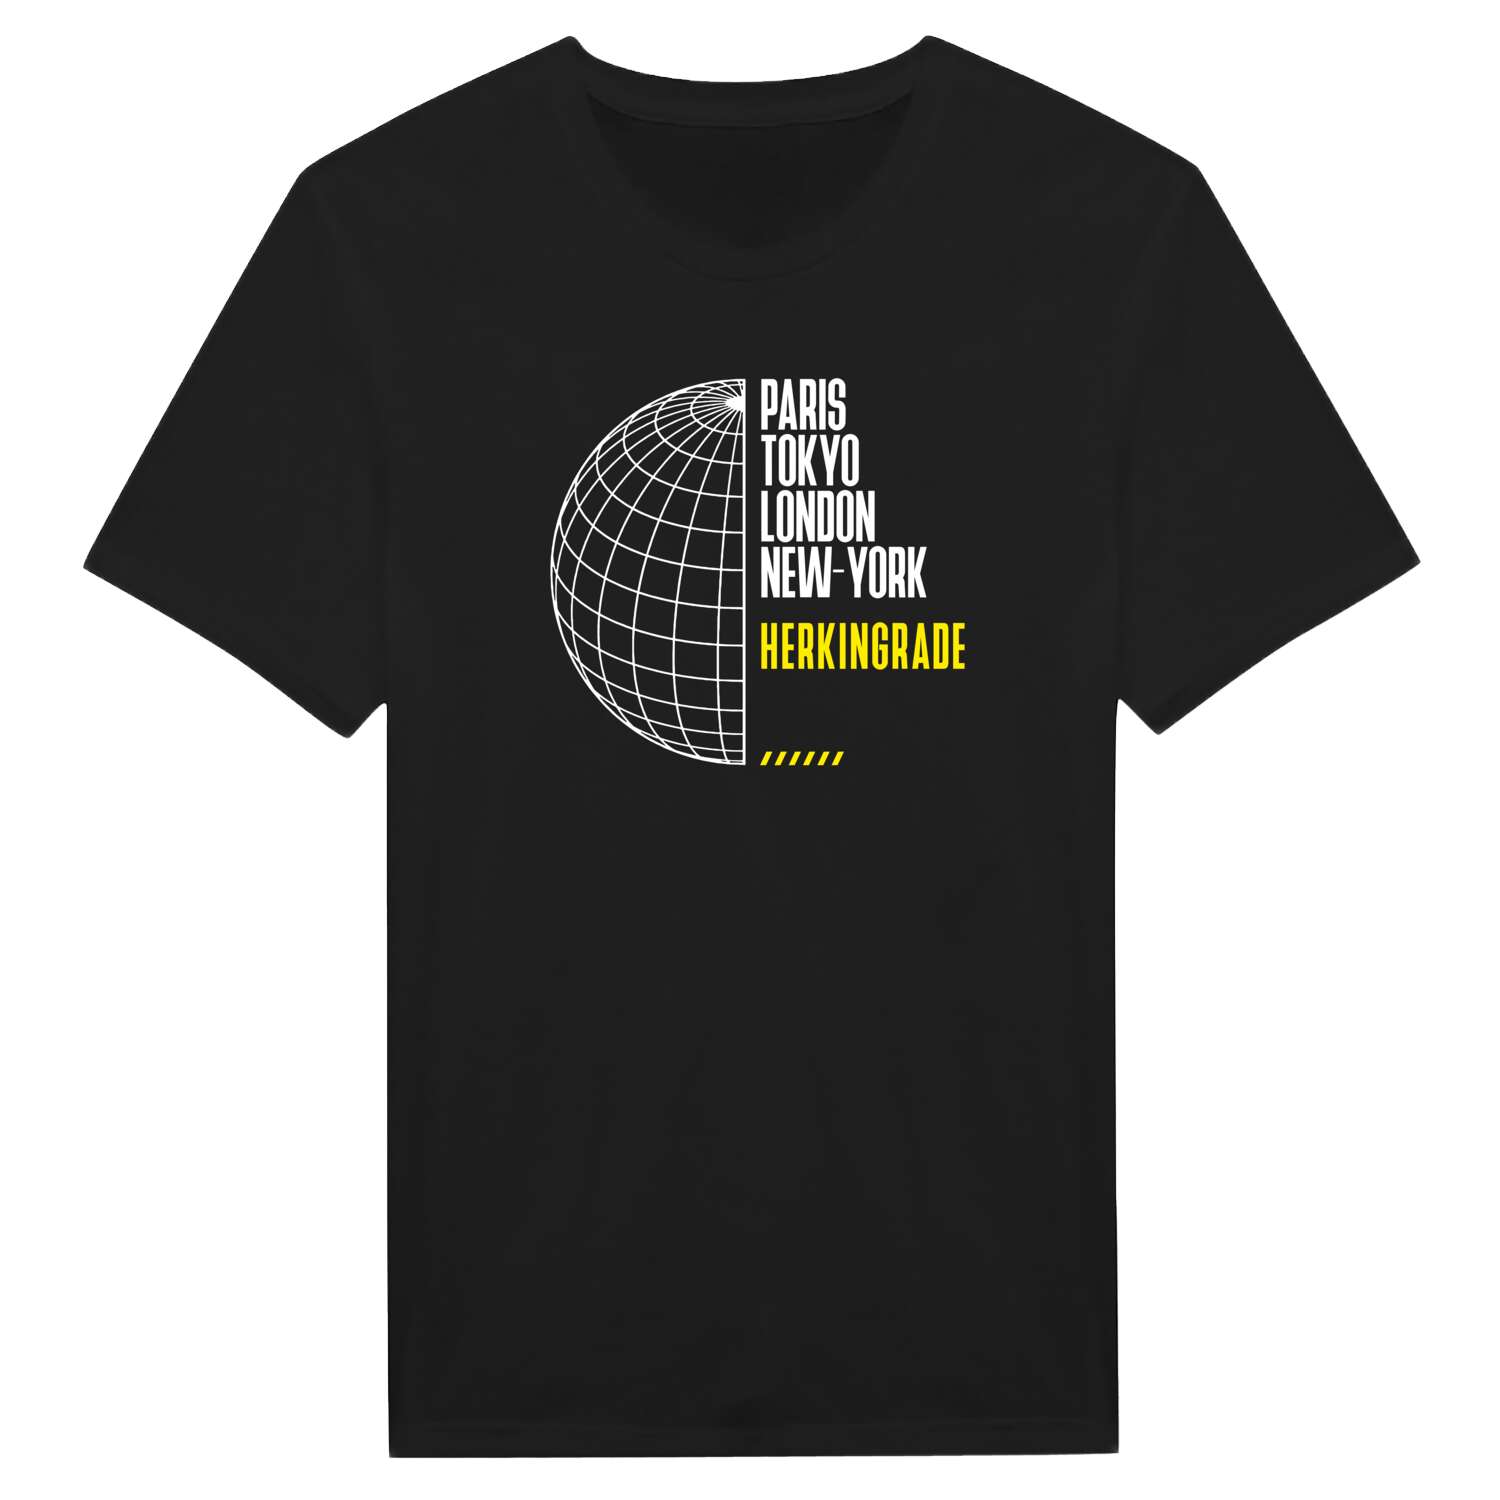 Herkingrade T-Shirt »Paris Tokyo London«